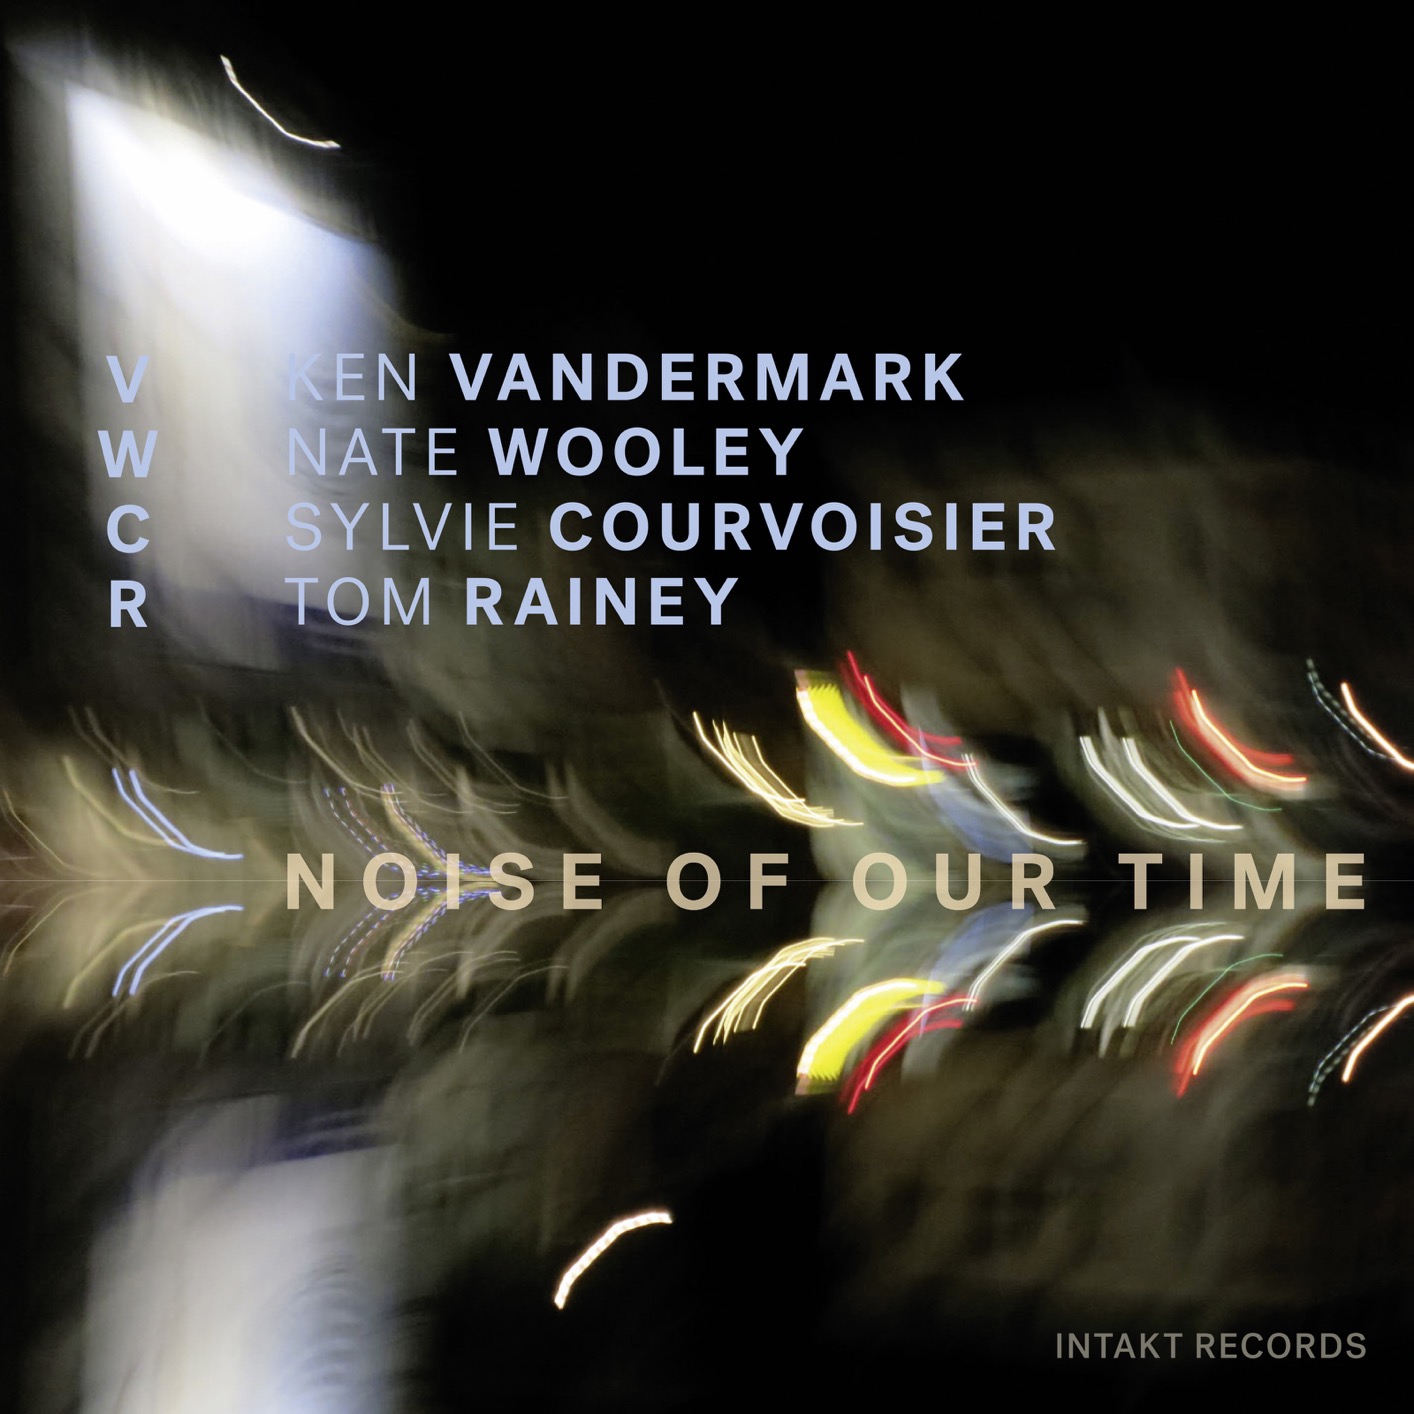 VWCR: Ken Vandermark, Nate Wooley, Sylvie Courvoisier, Tom Rainey - Noise of Our Time (2018) [FLAC 24bit/96kHz]